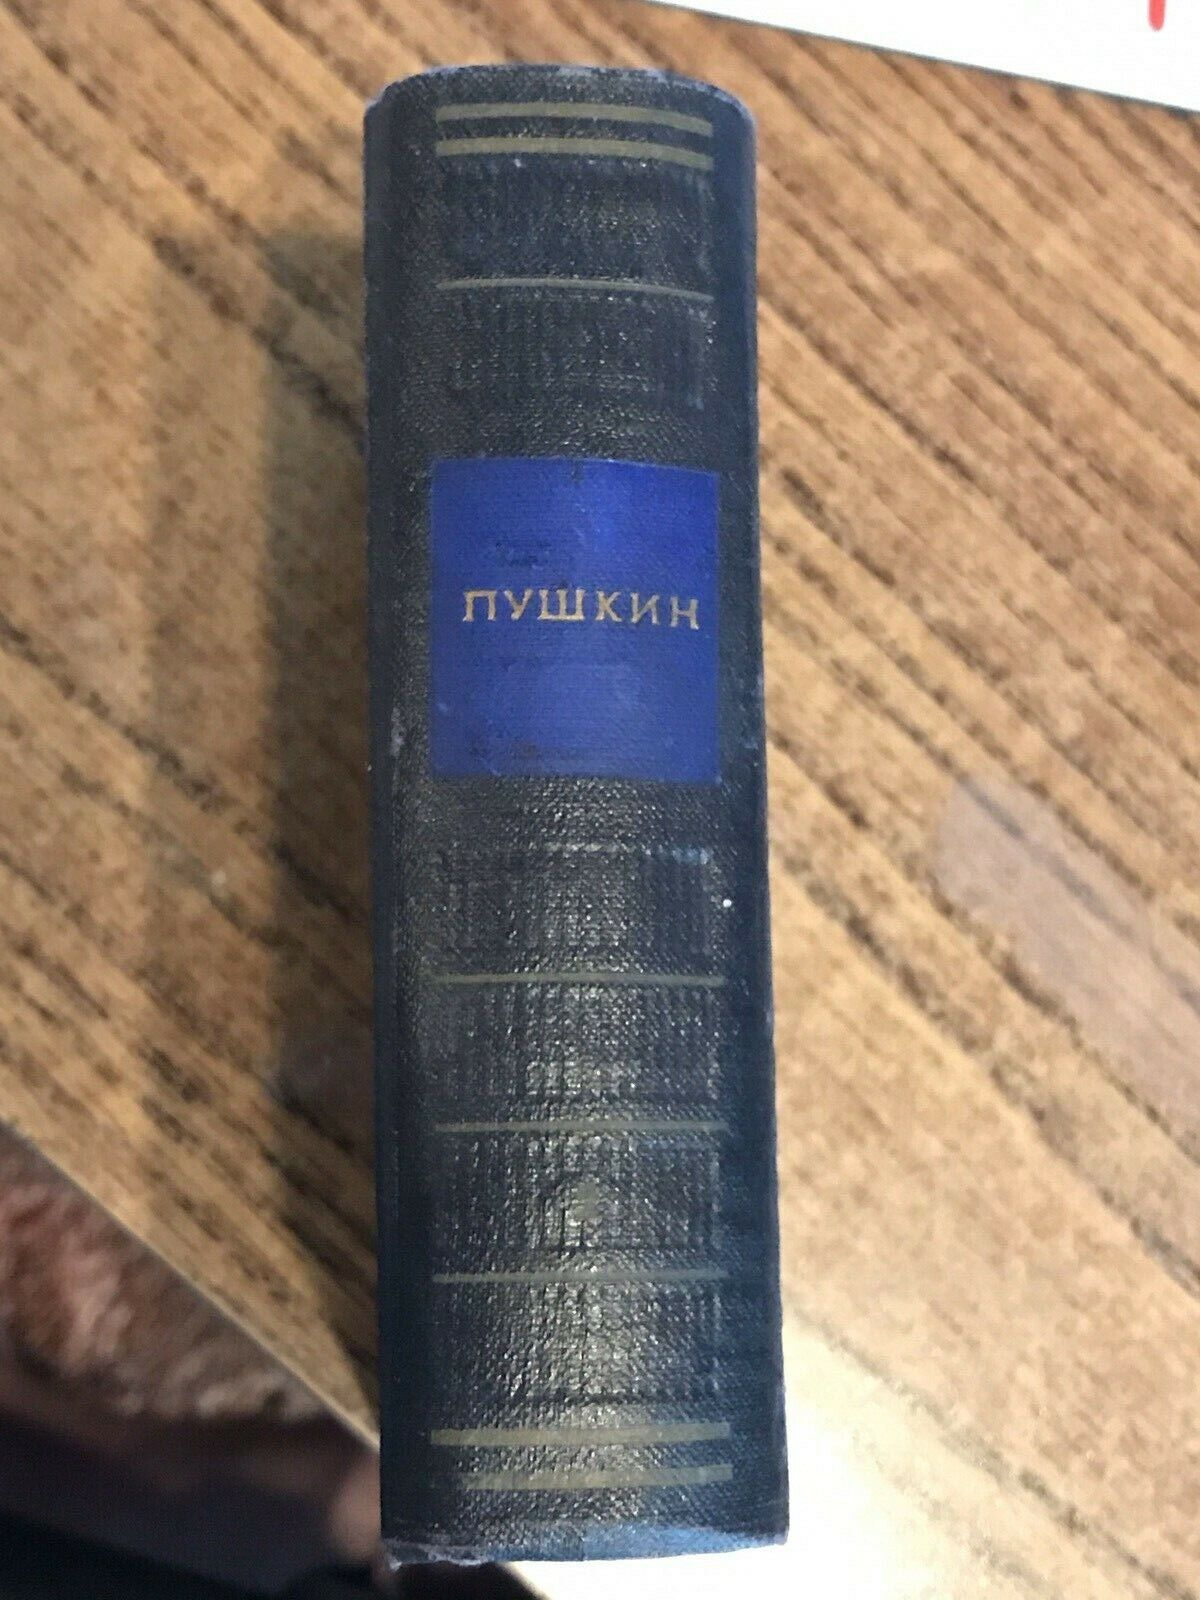 Пушкин -1954 Alexander Pushkin - Selected Works Russian Vintage Book Rare Без бренда - фотография #12